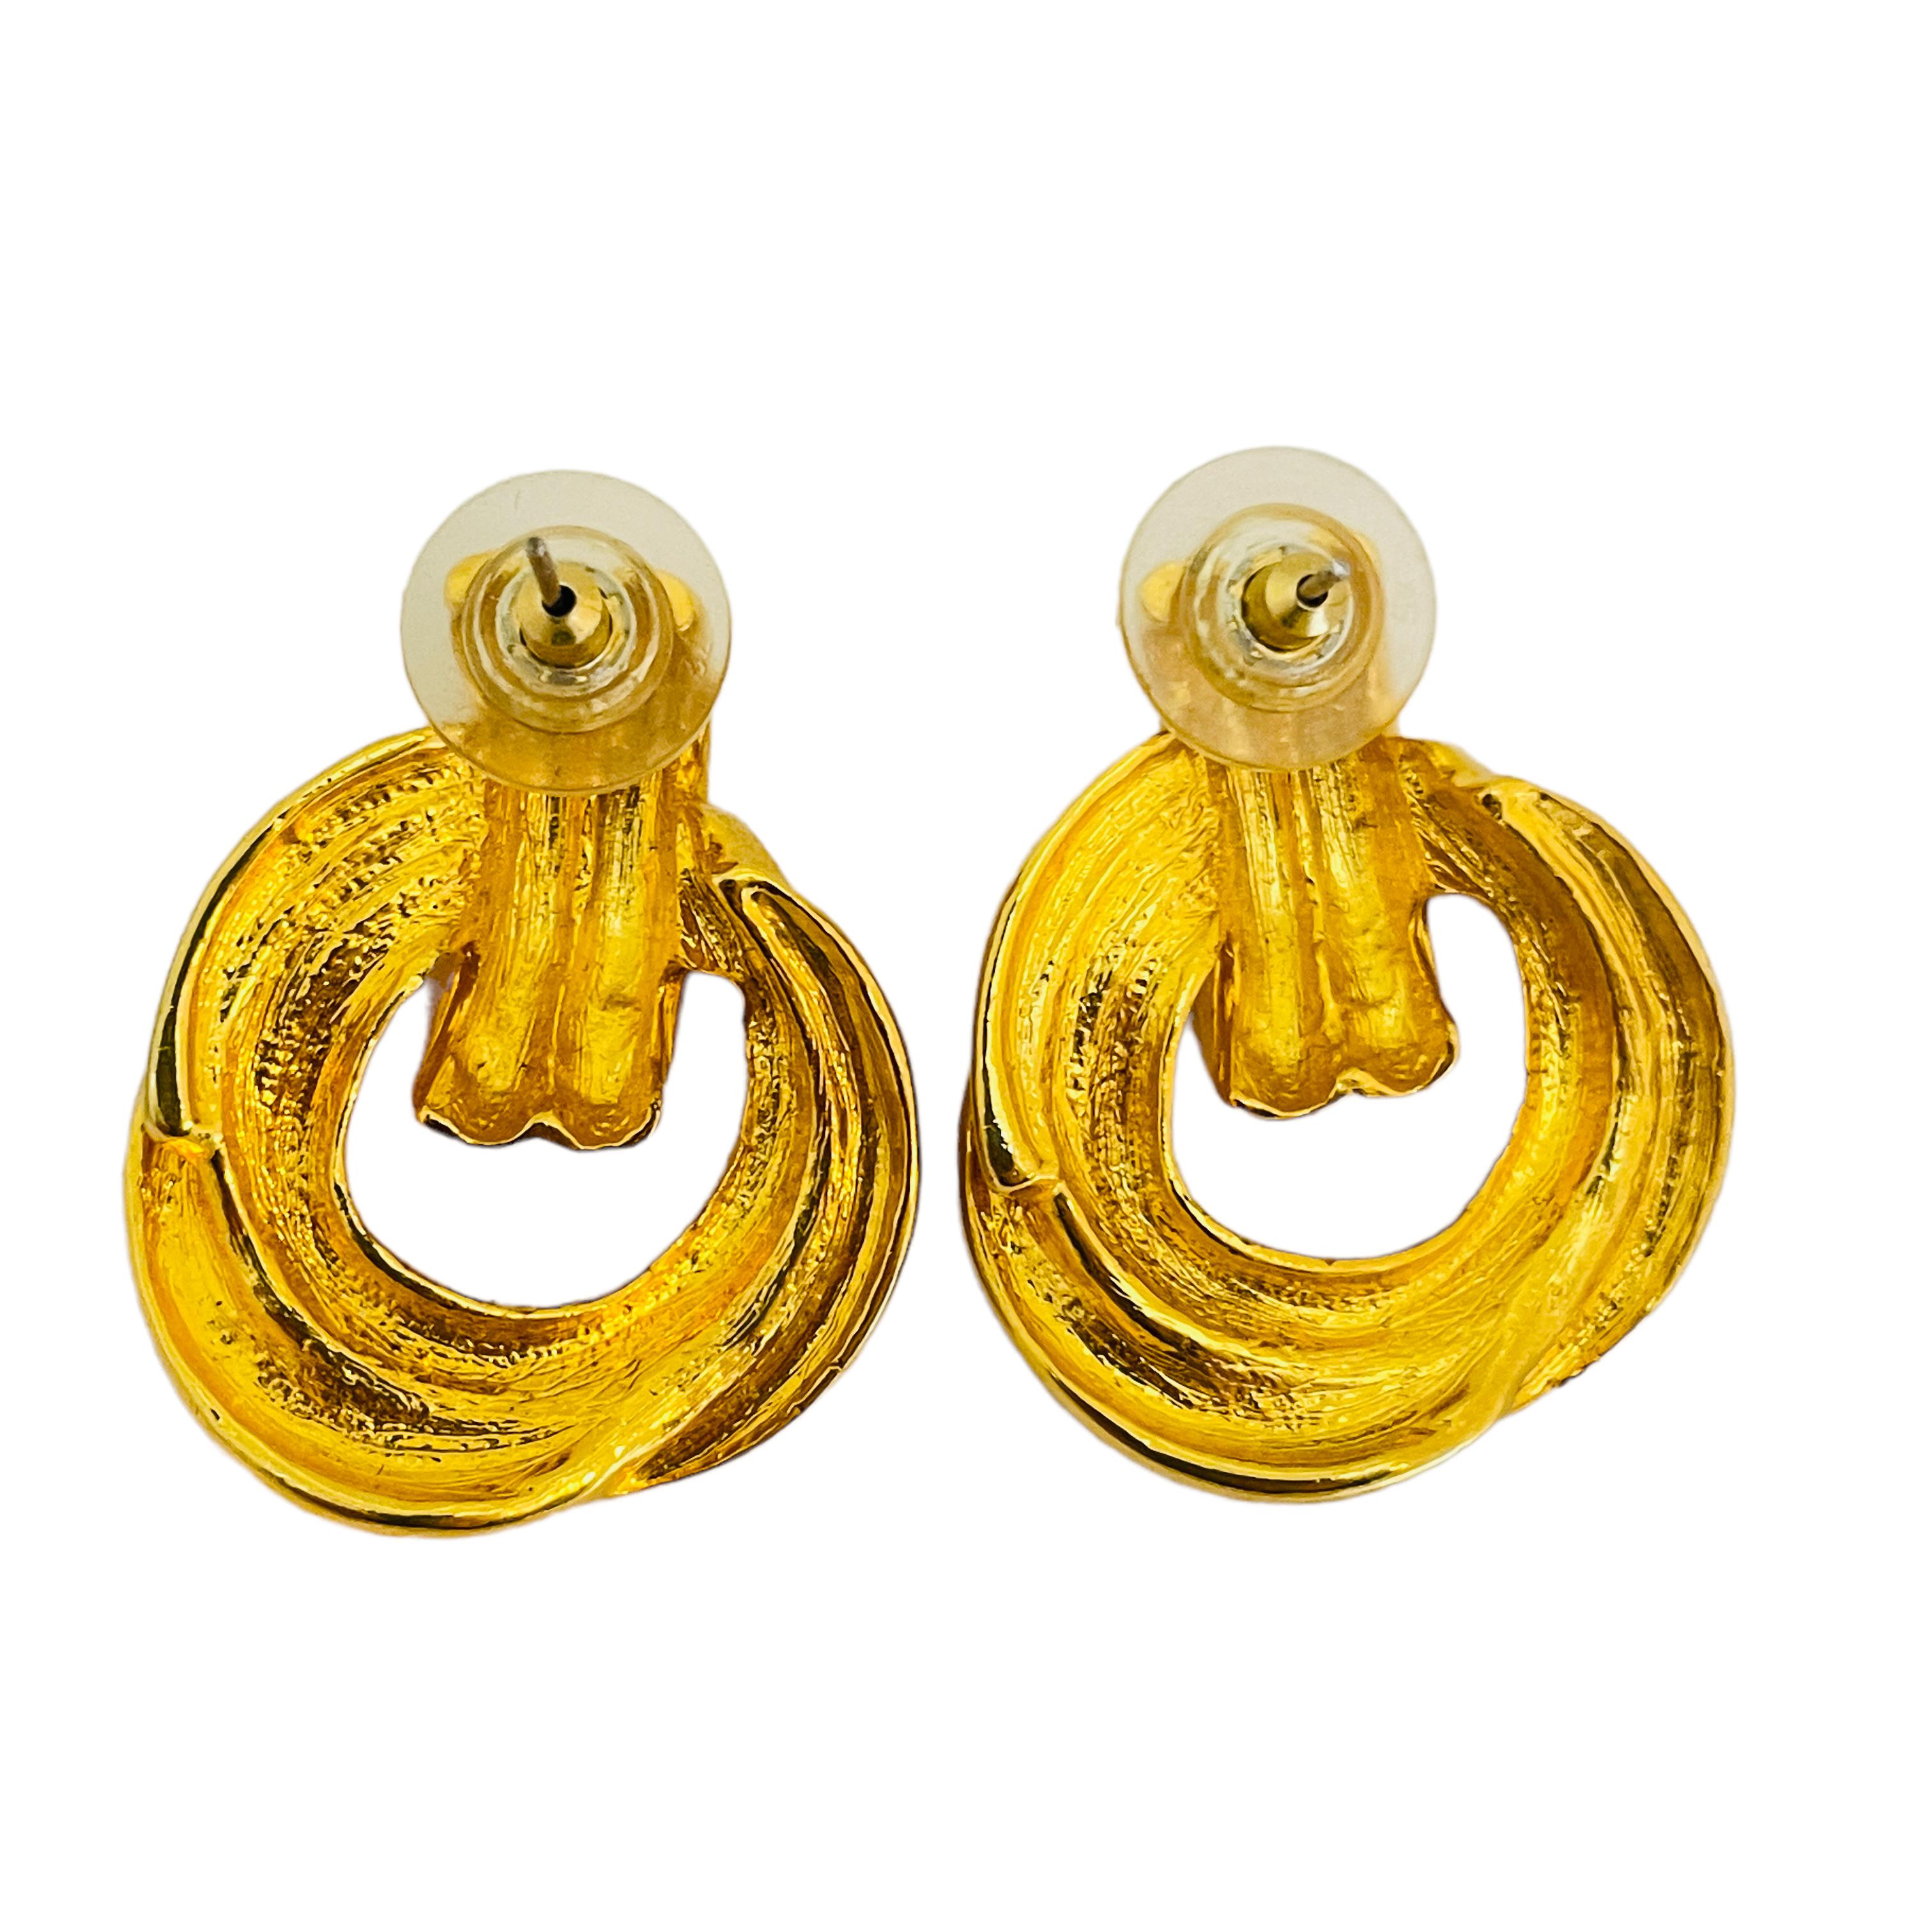 Vintage gold door knocker designer runway pierced earrings In Good Condition For Sale In Palos Hills, IL